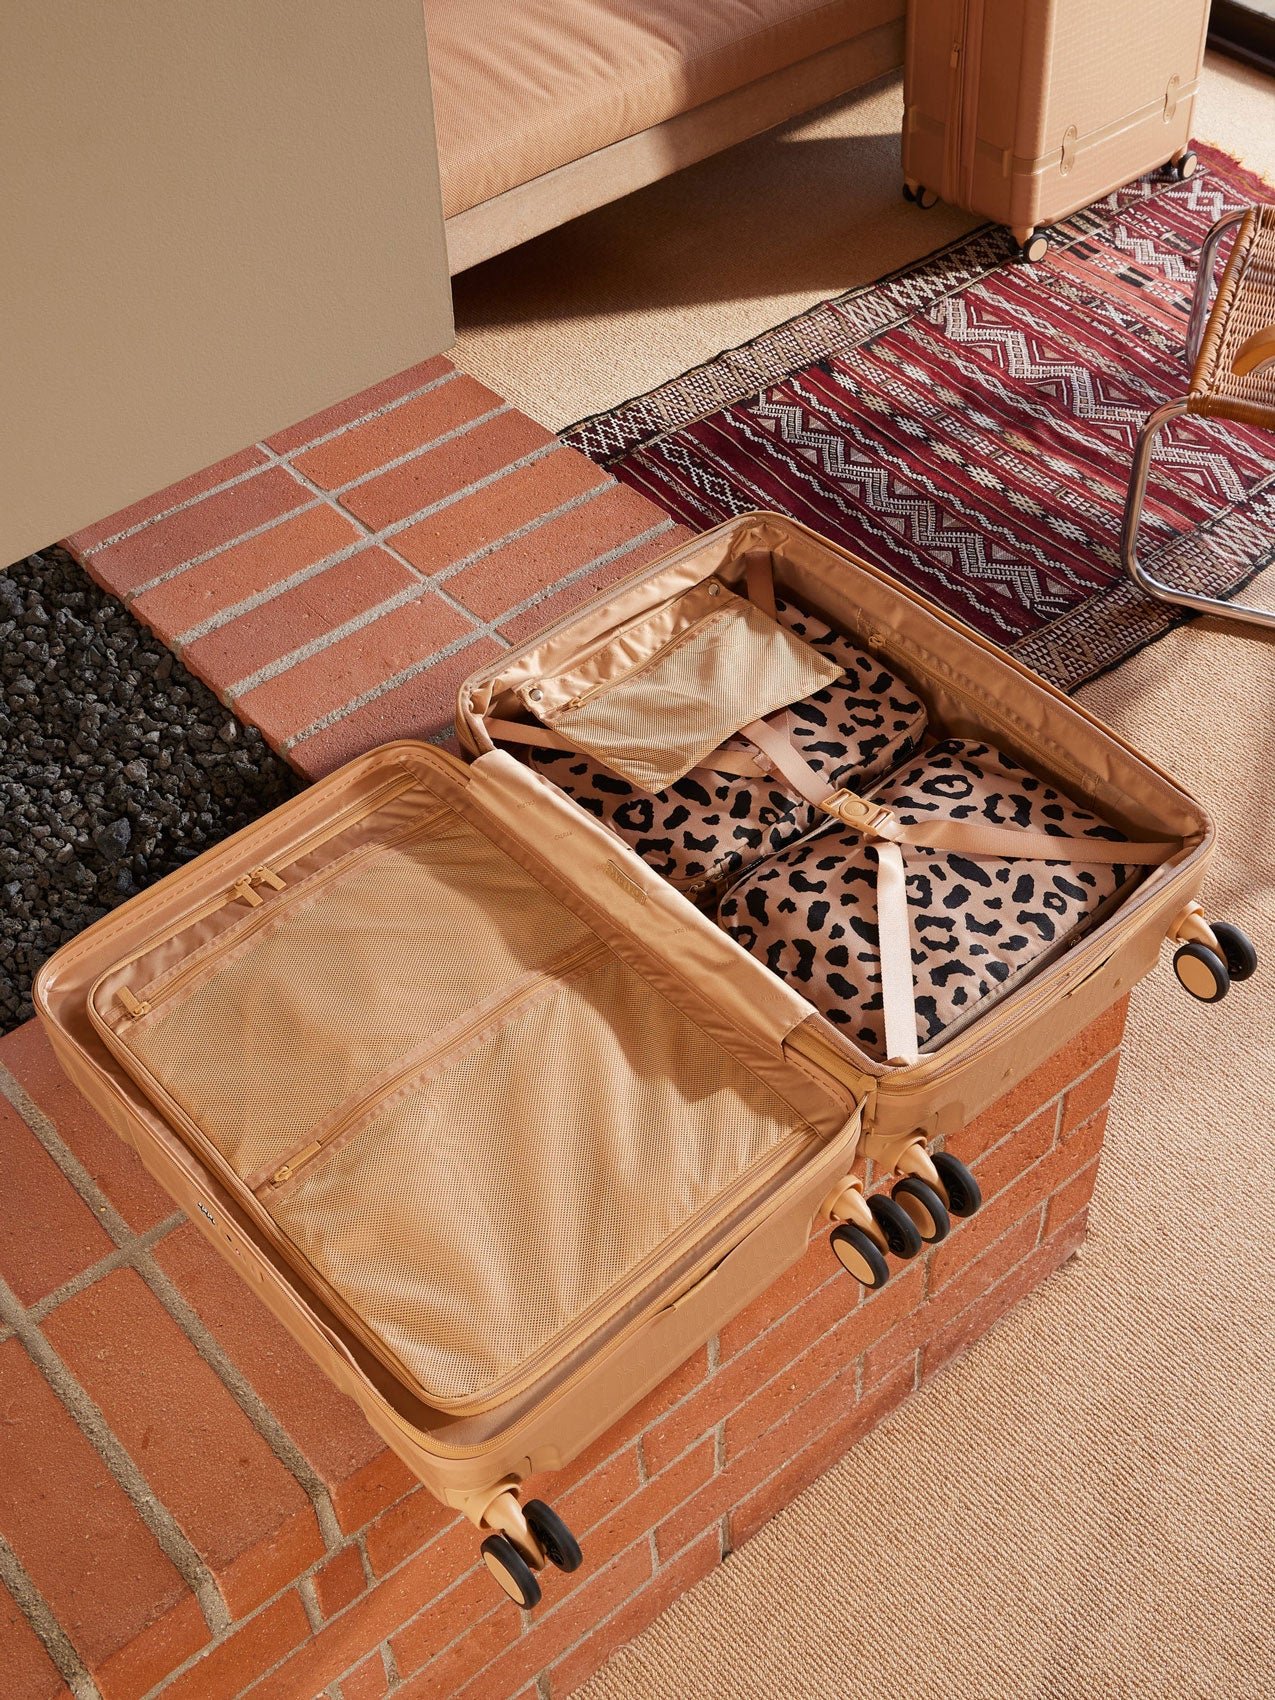 CALPAK TRNK almond 25 inch medium size luggage with compression straps